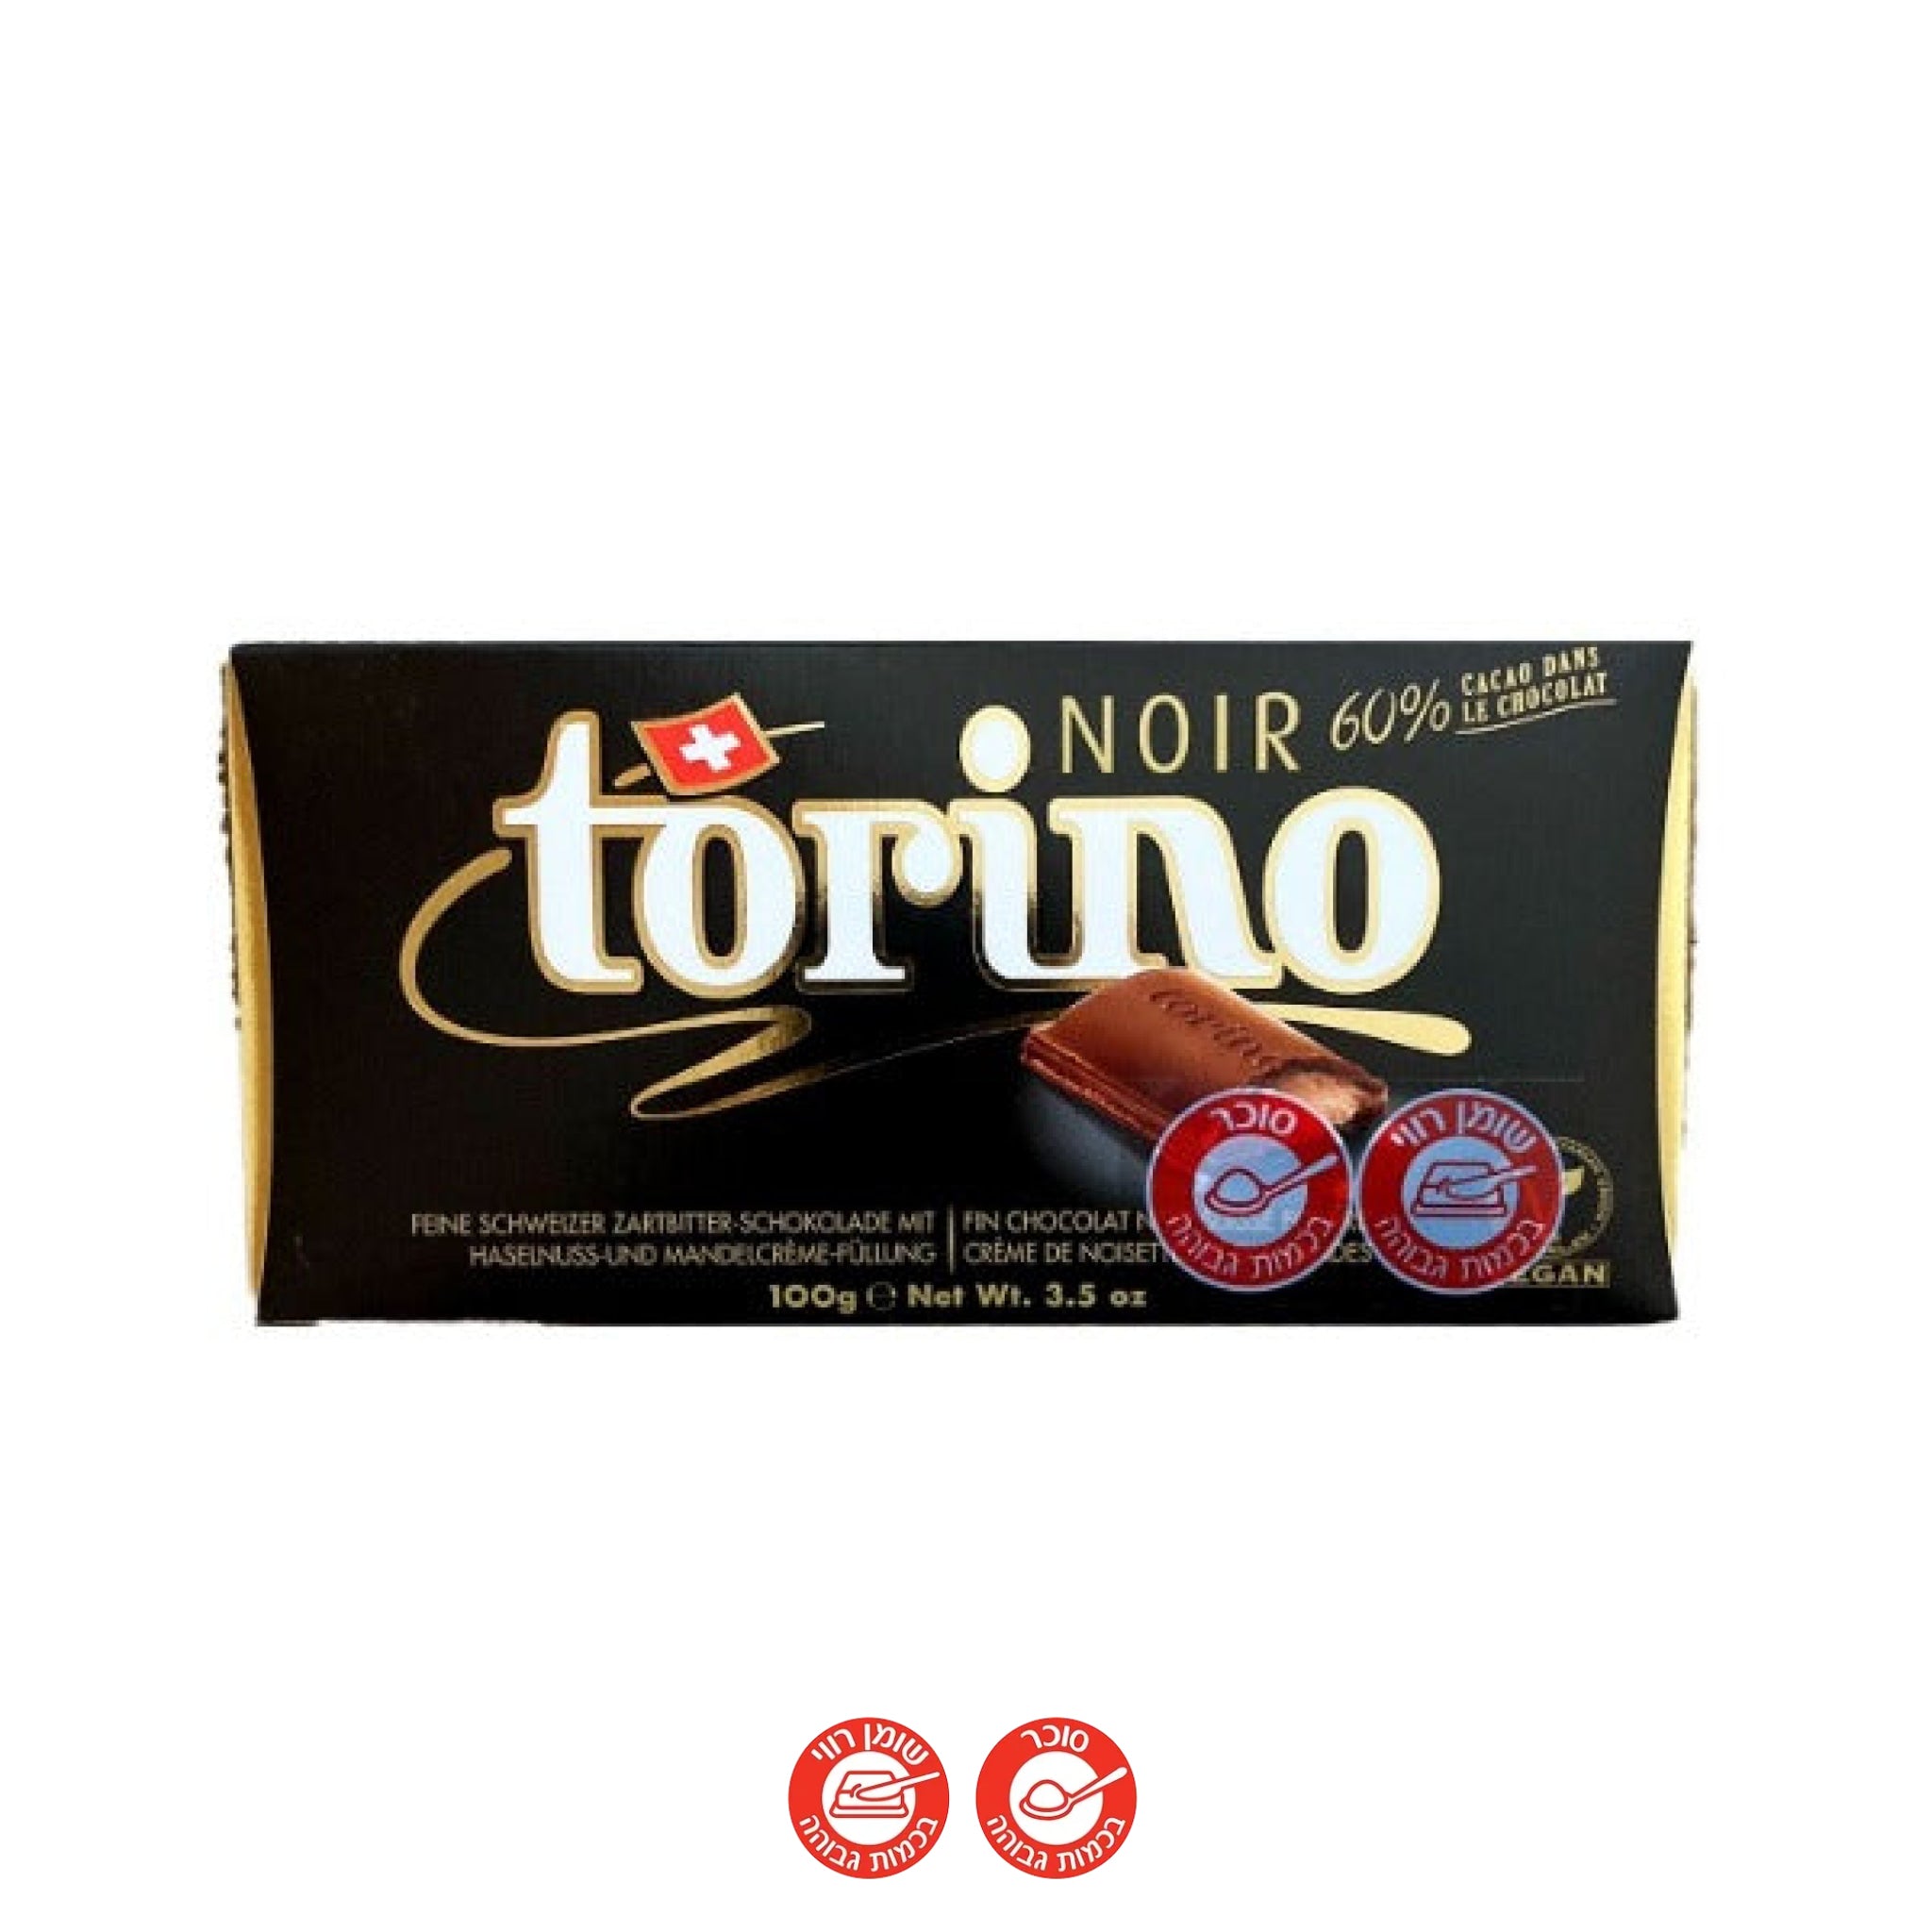 Torino noir - שוקולד מריר טורינו - טעימים